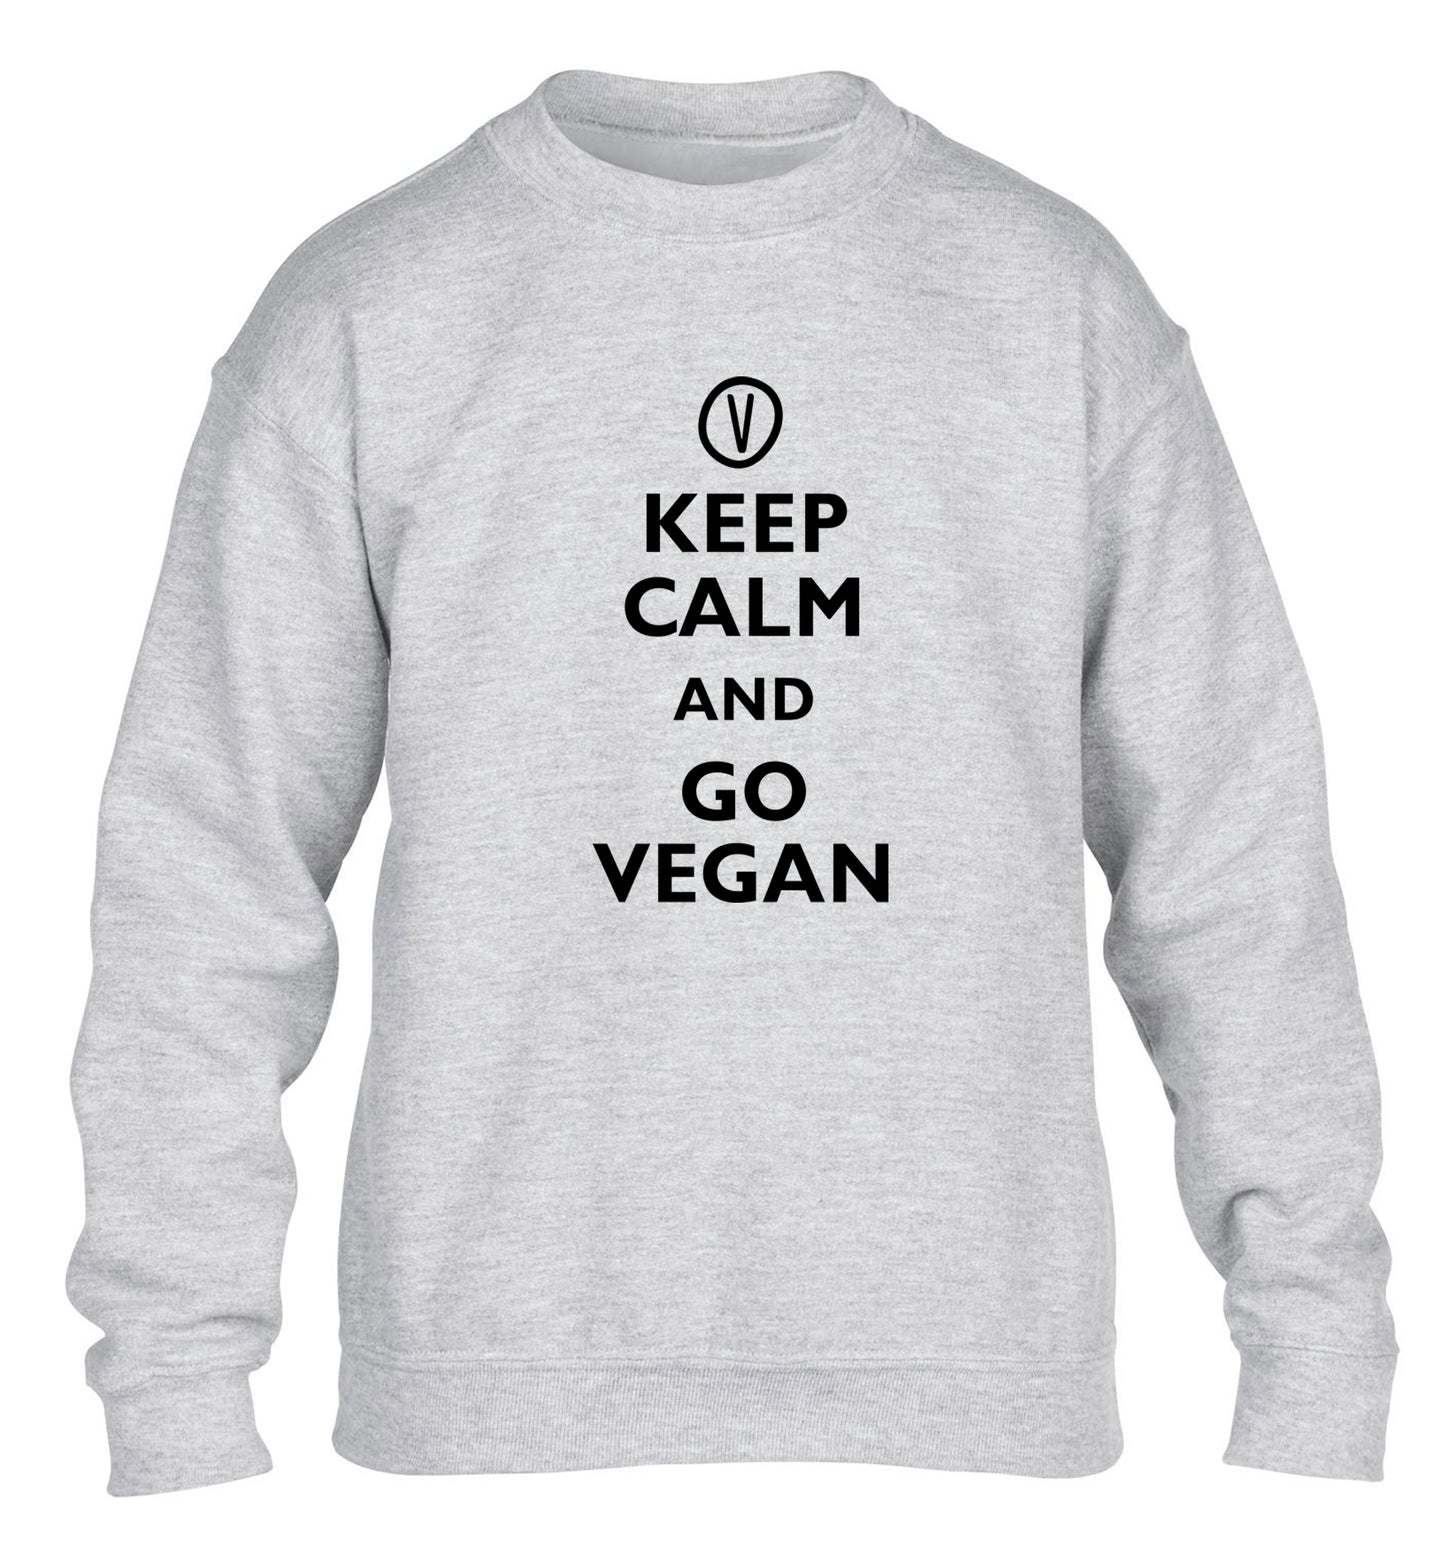 Keep calm and go vegan children's grey sweater 12-13 Years